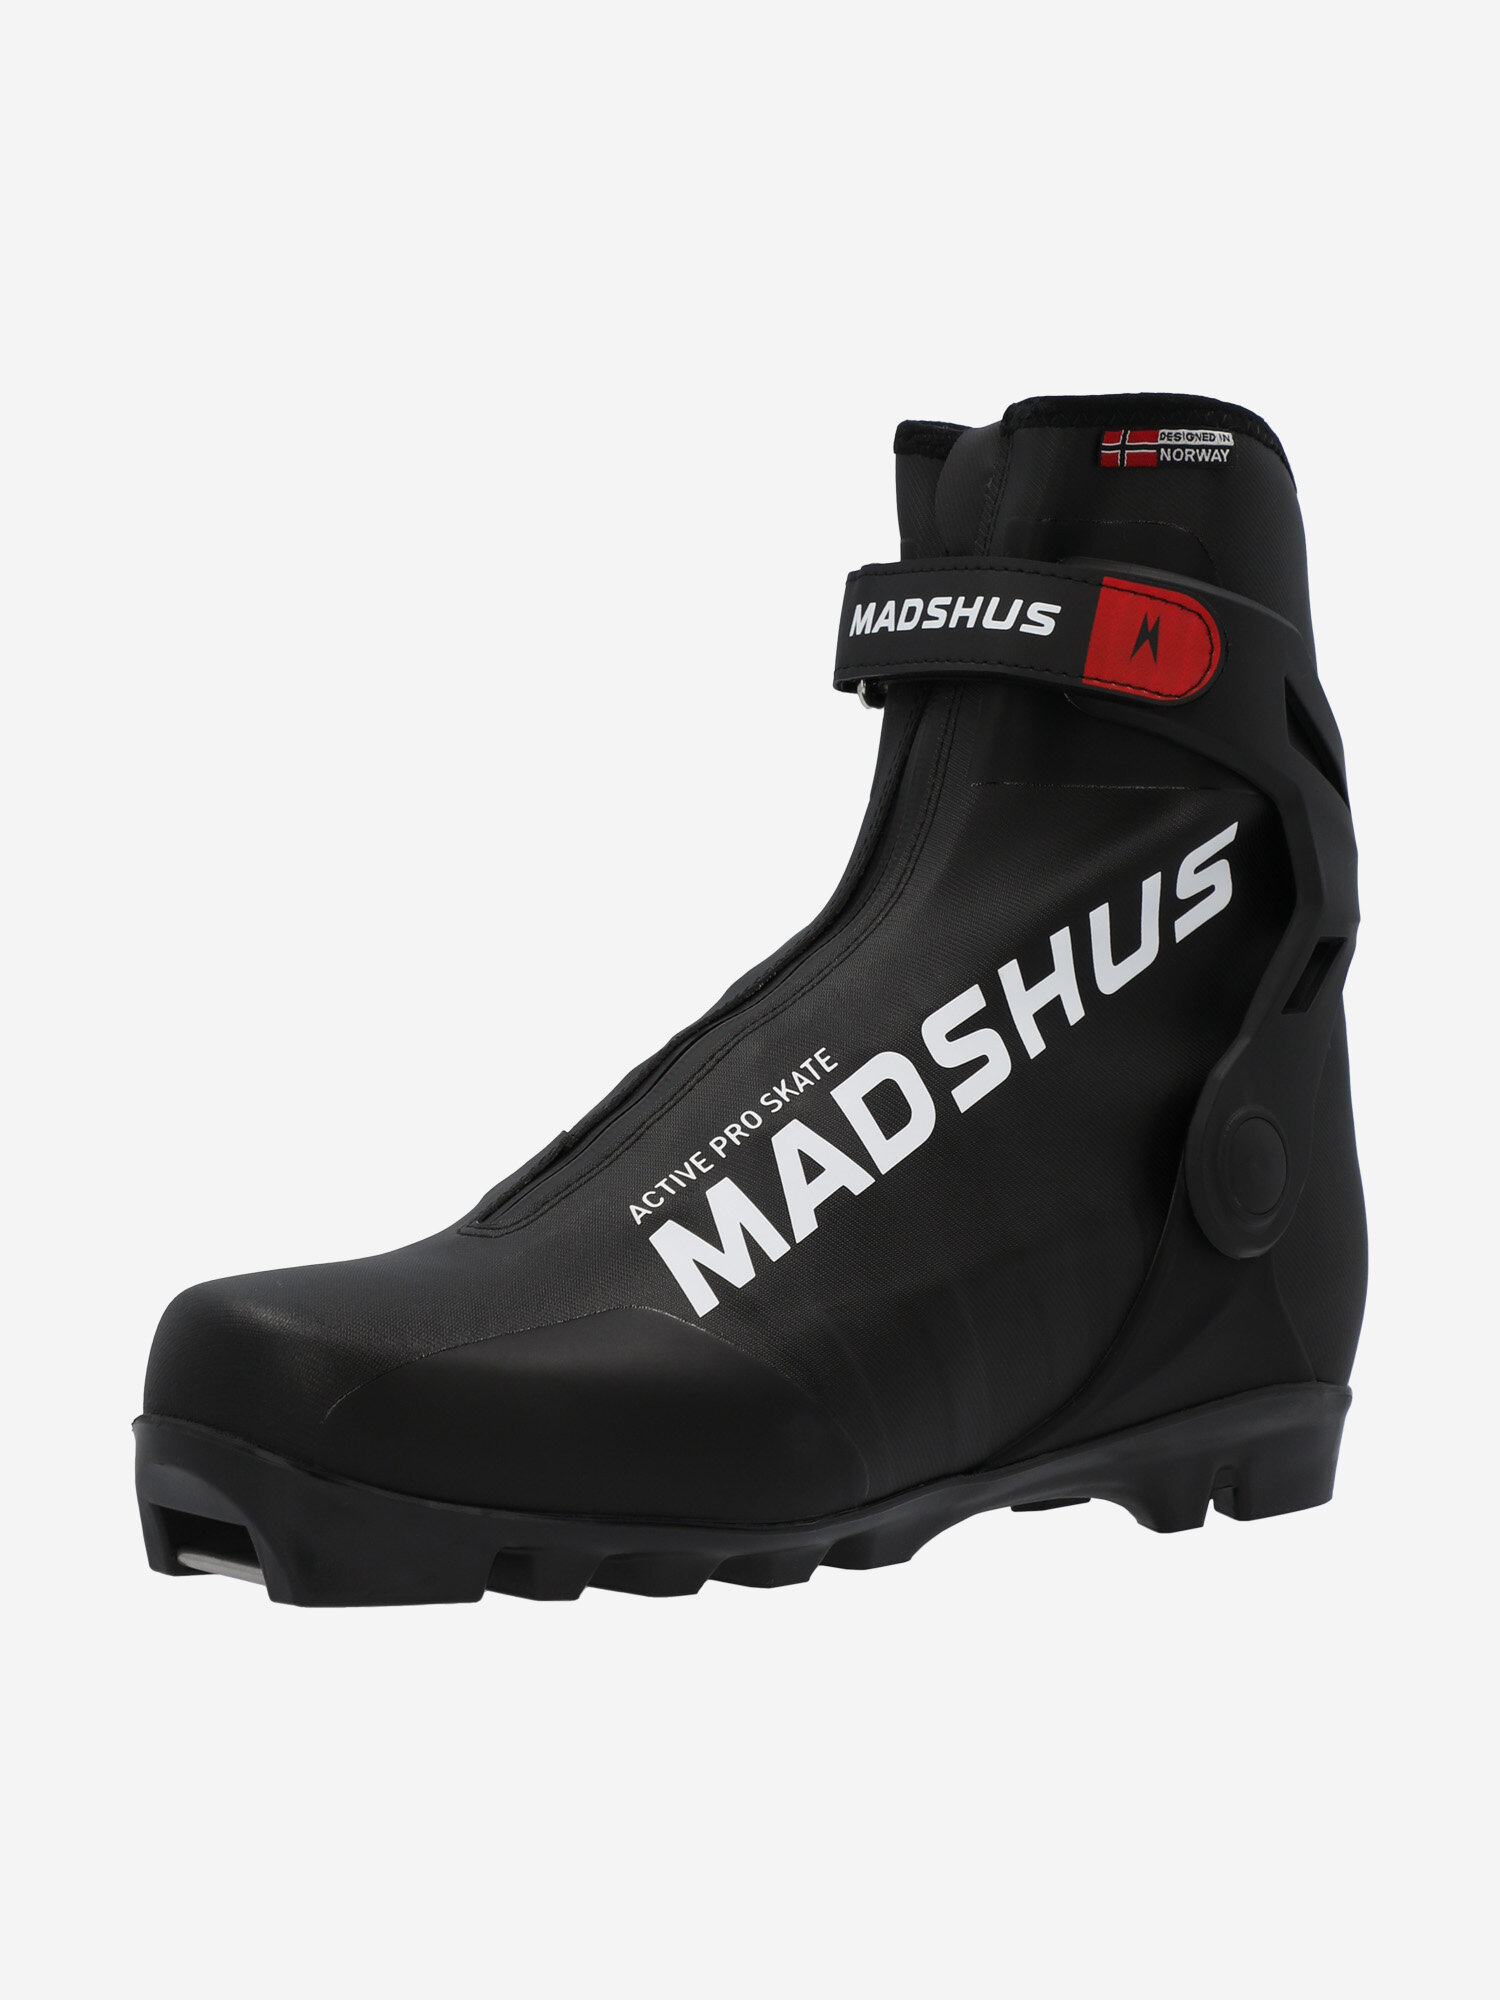 Ботинки для беговых лыж Madshus Active Pro Skate NNN Черный; RUS: 43, Ориг: 44